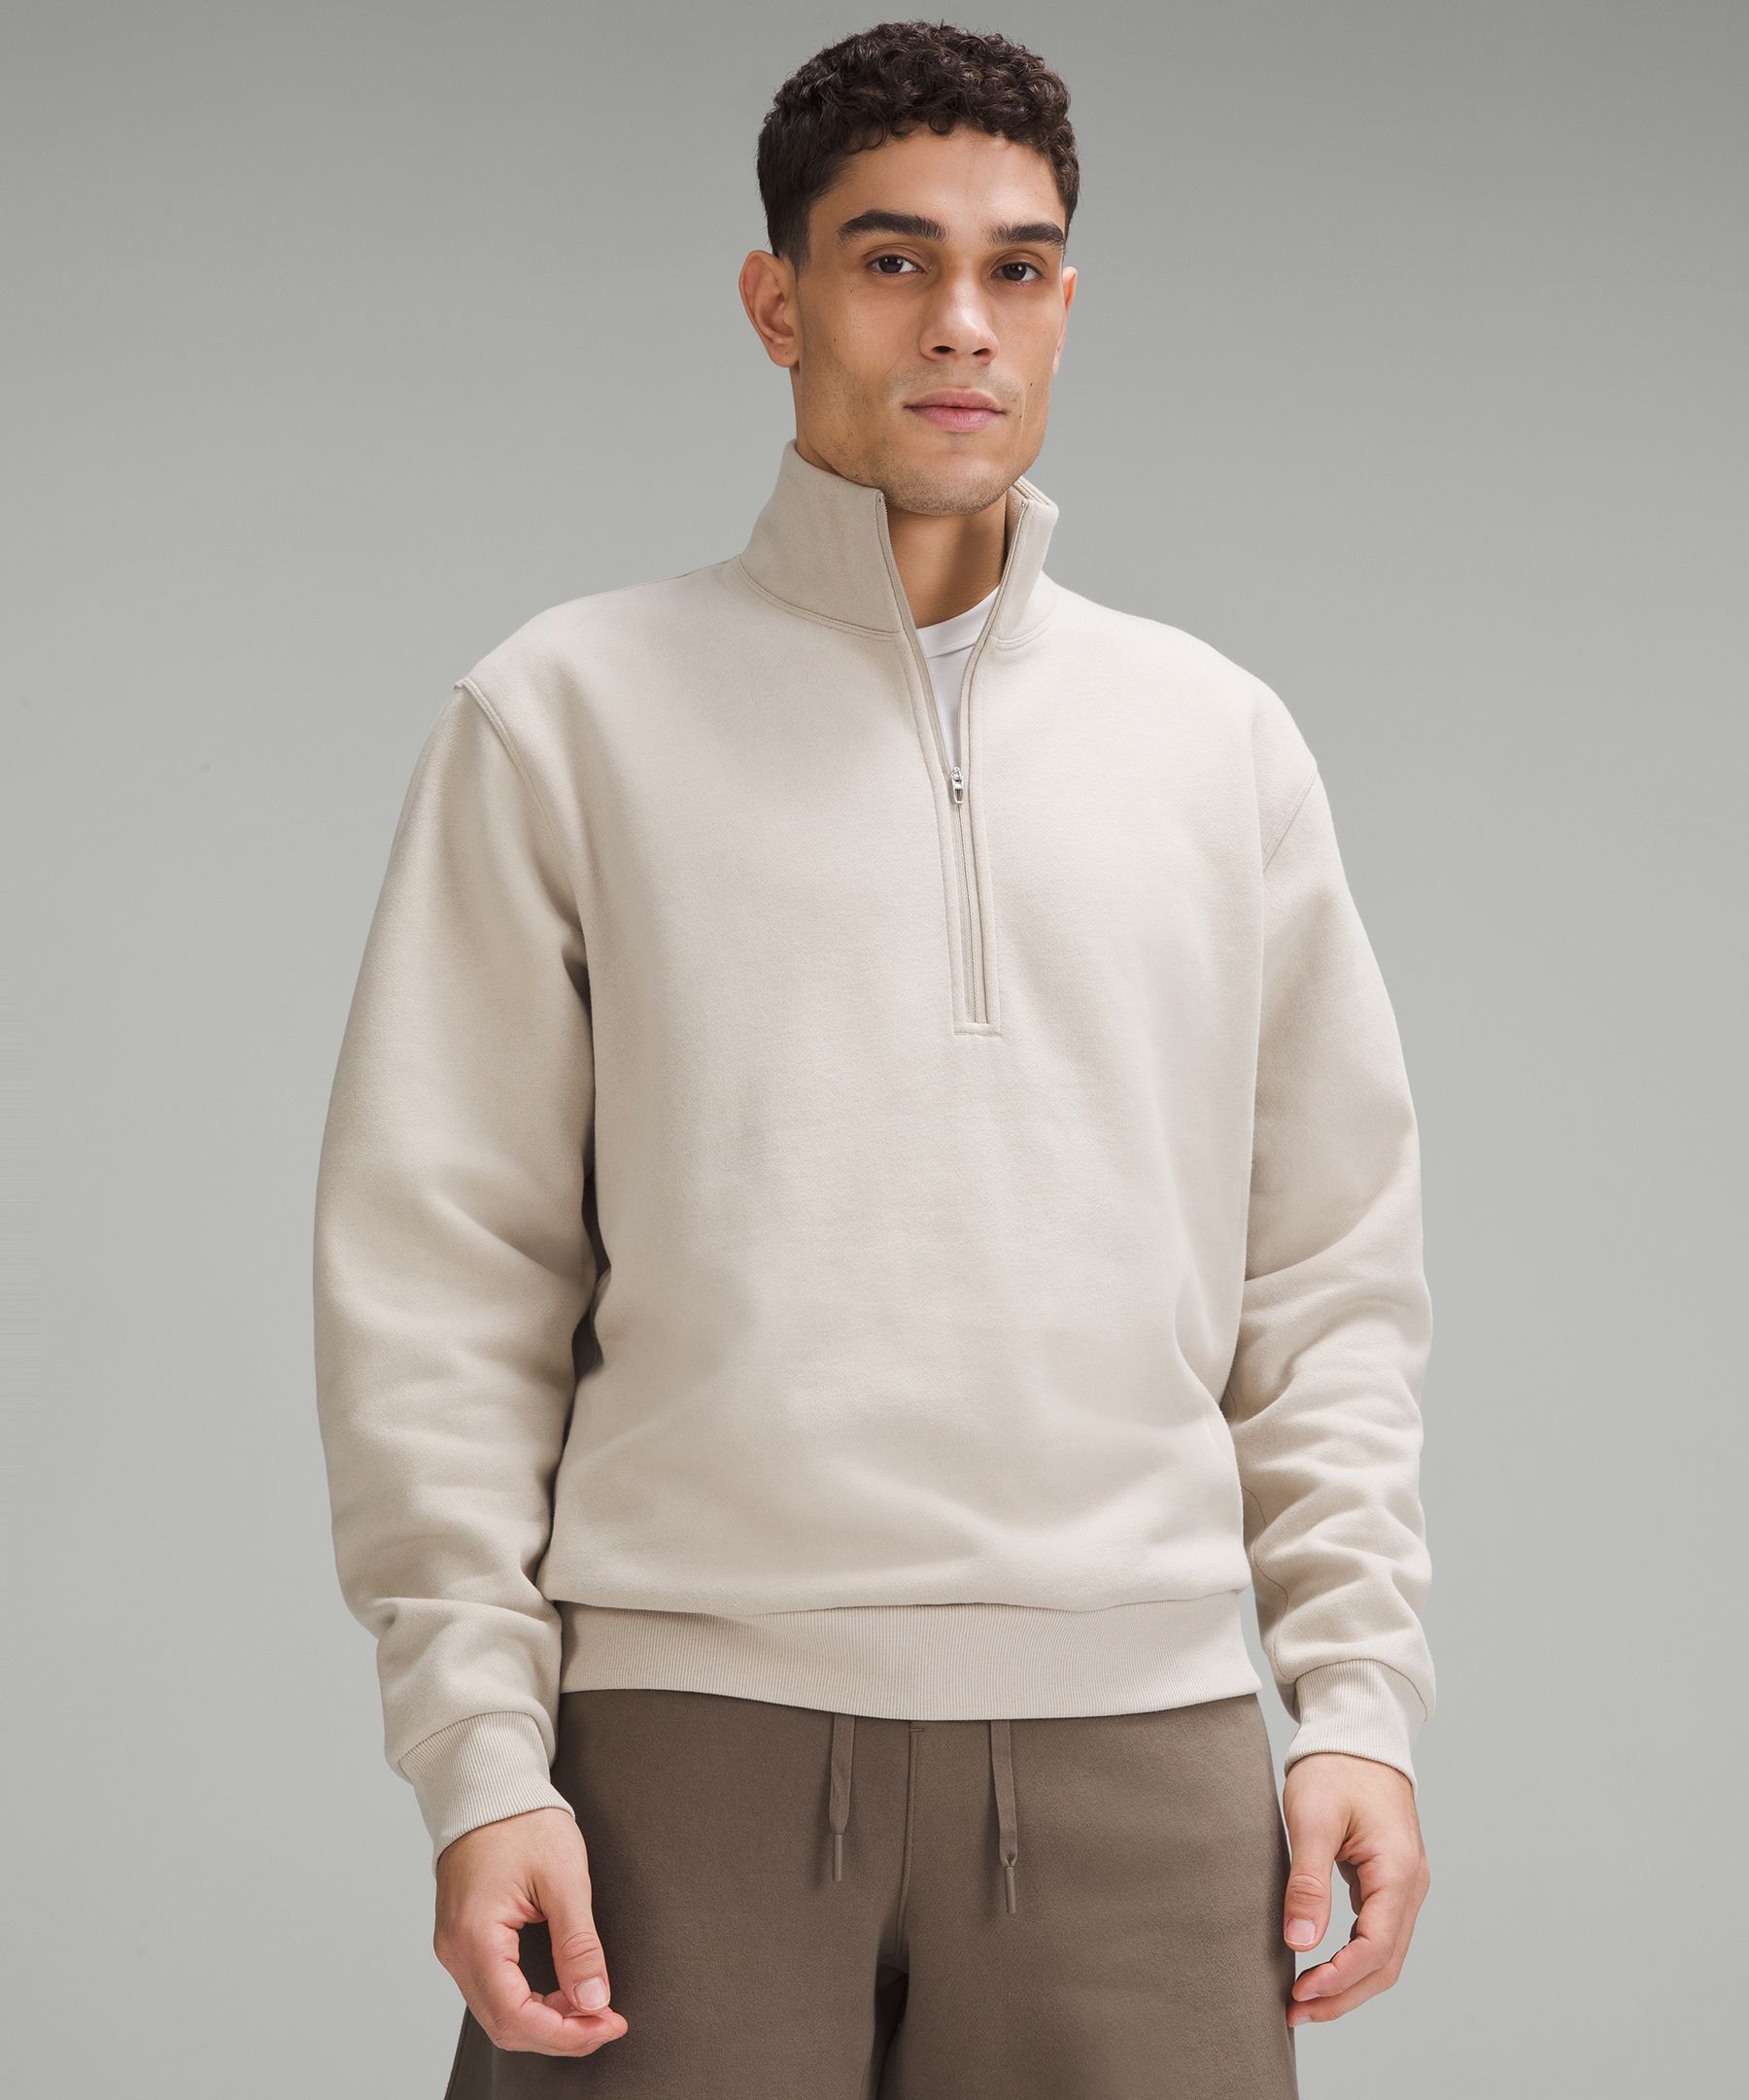 Steady State Half Zip | Men's Hoodies & Sweatshirts